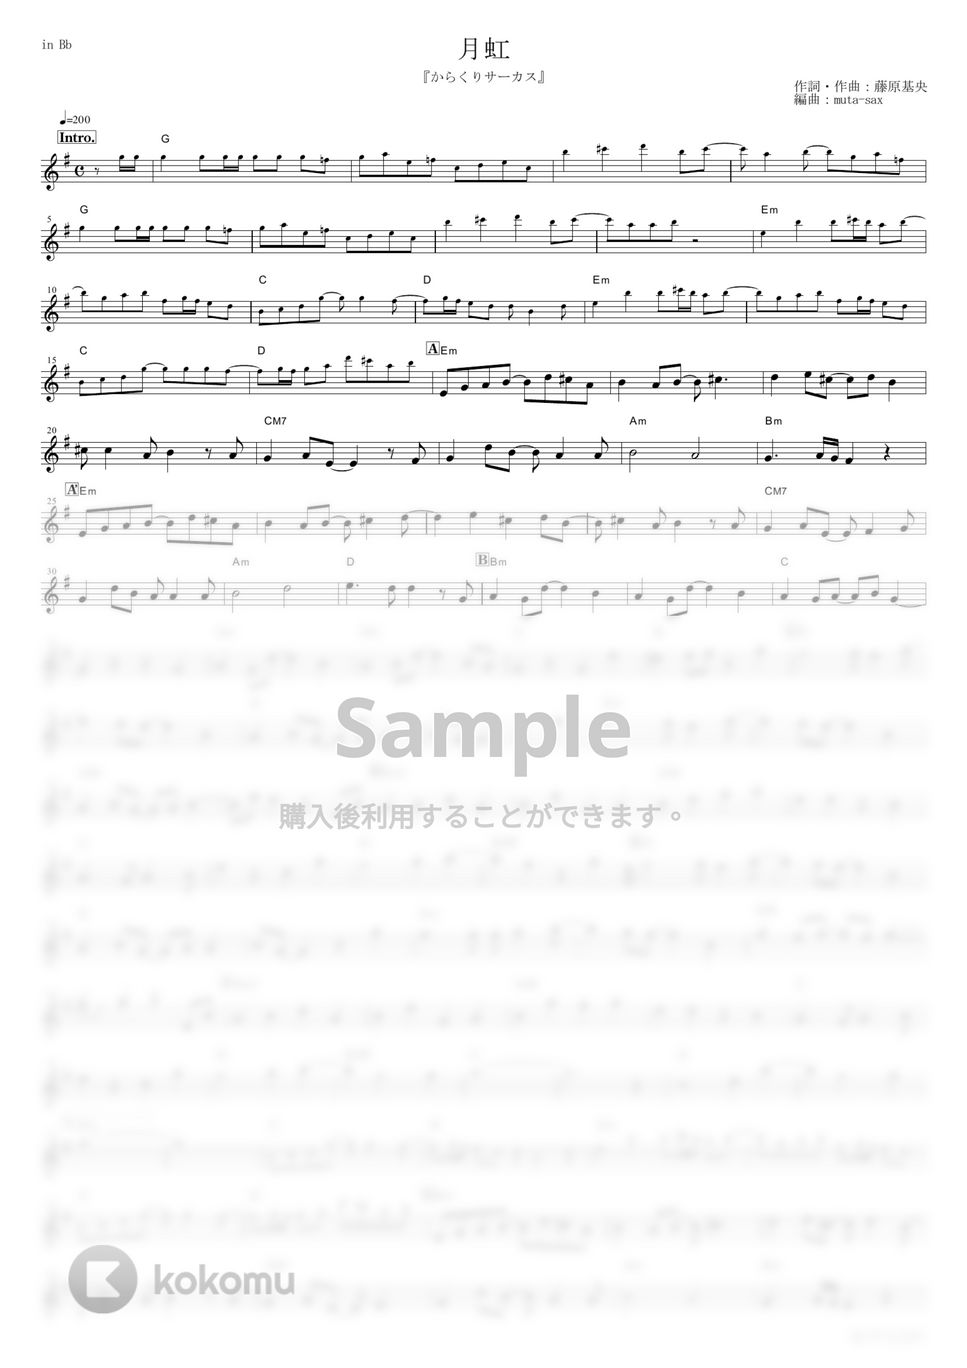 BUMP OF CHICKEN - 月虹 (『からくりサーカス』 / in Bb) by muta-sax